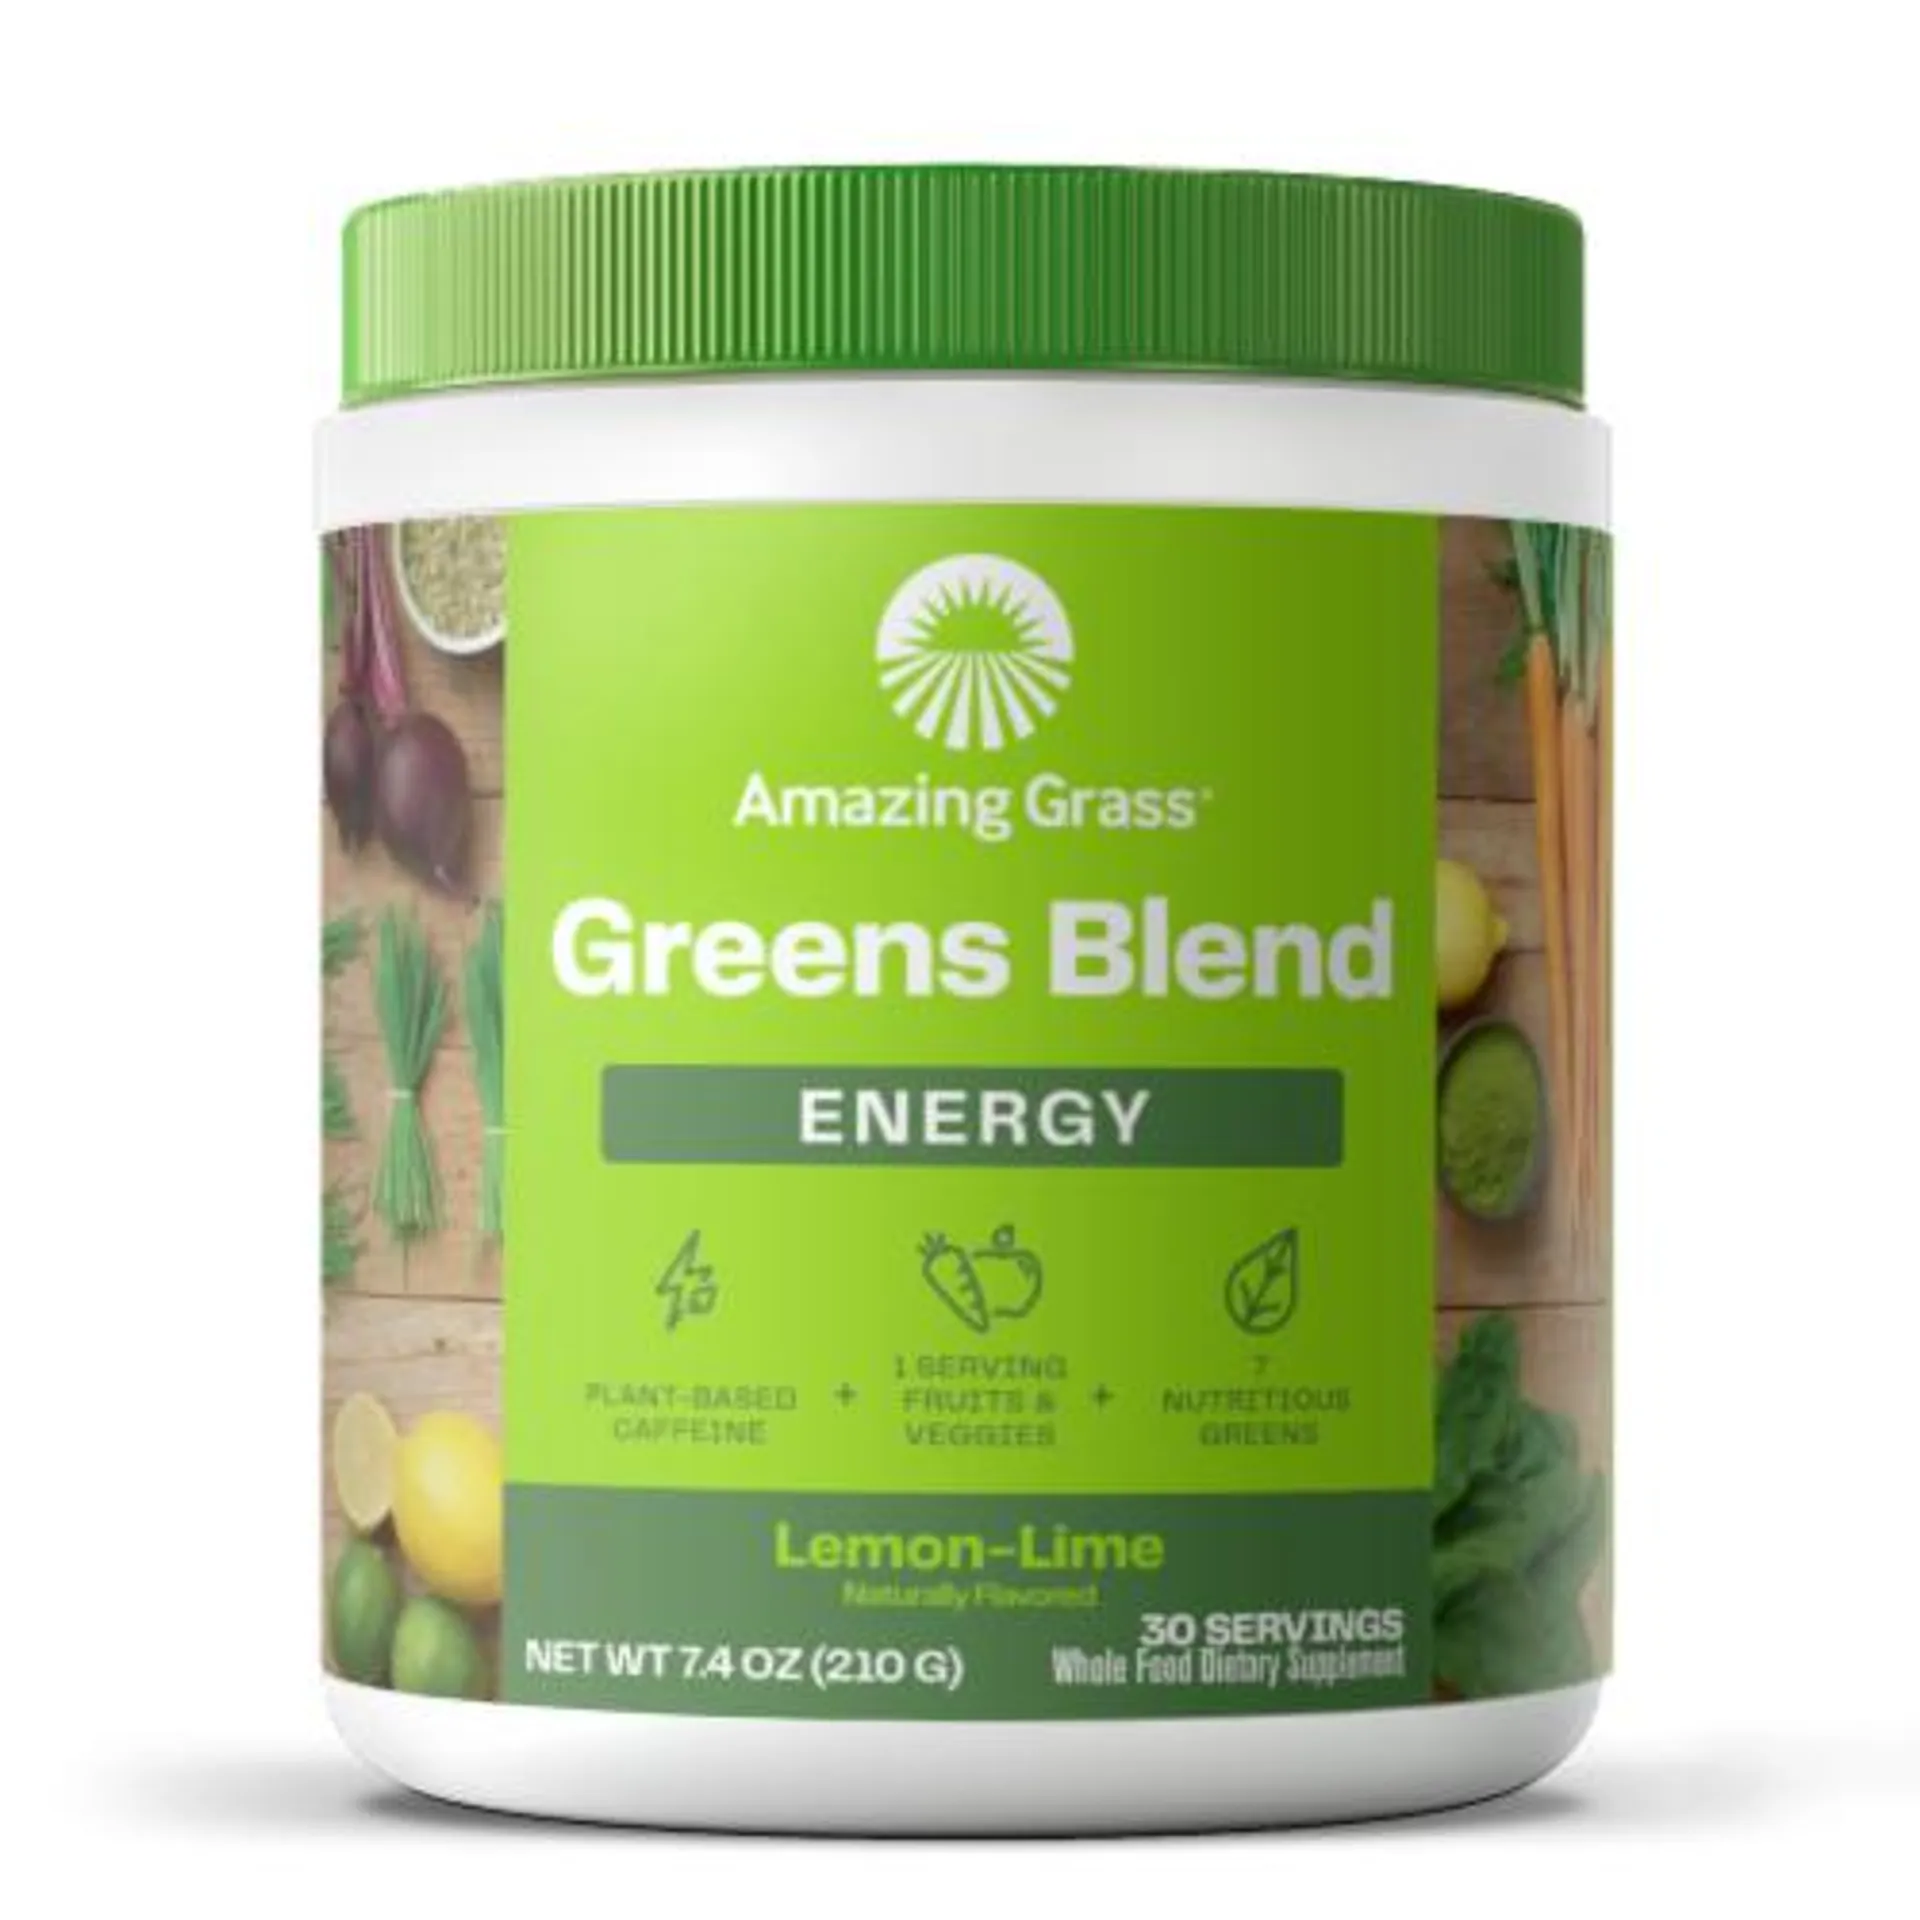 Amazing Grass® Greens Blend Lemon-Lime Energy Powder Supplement